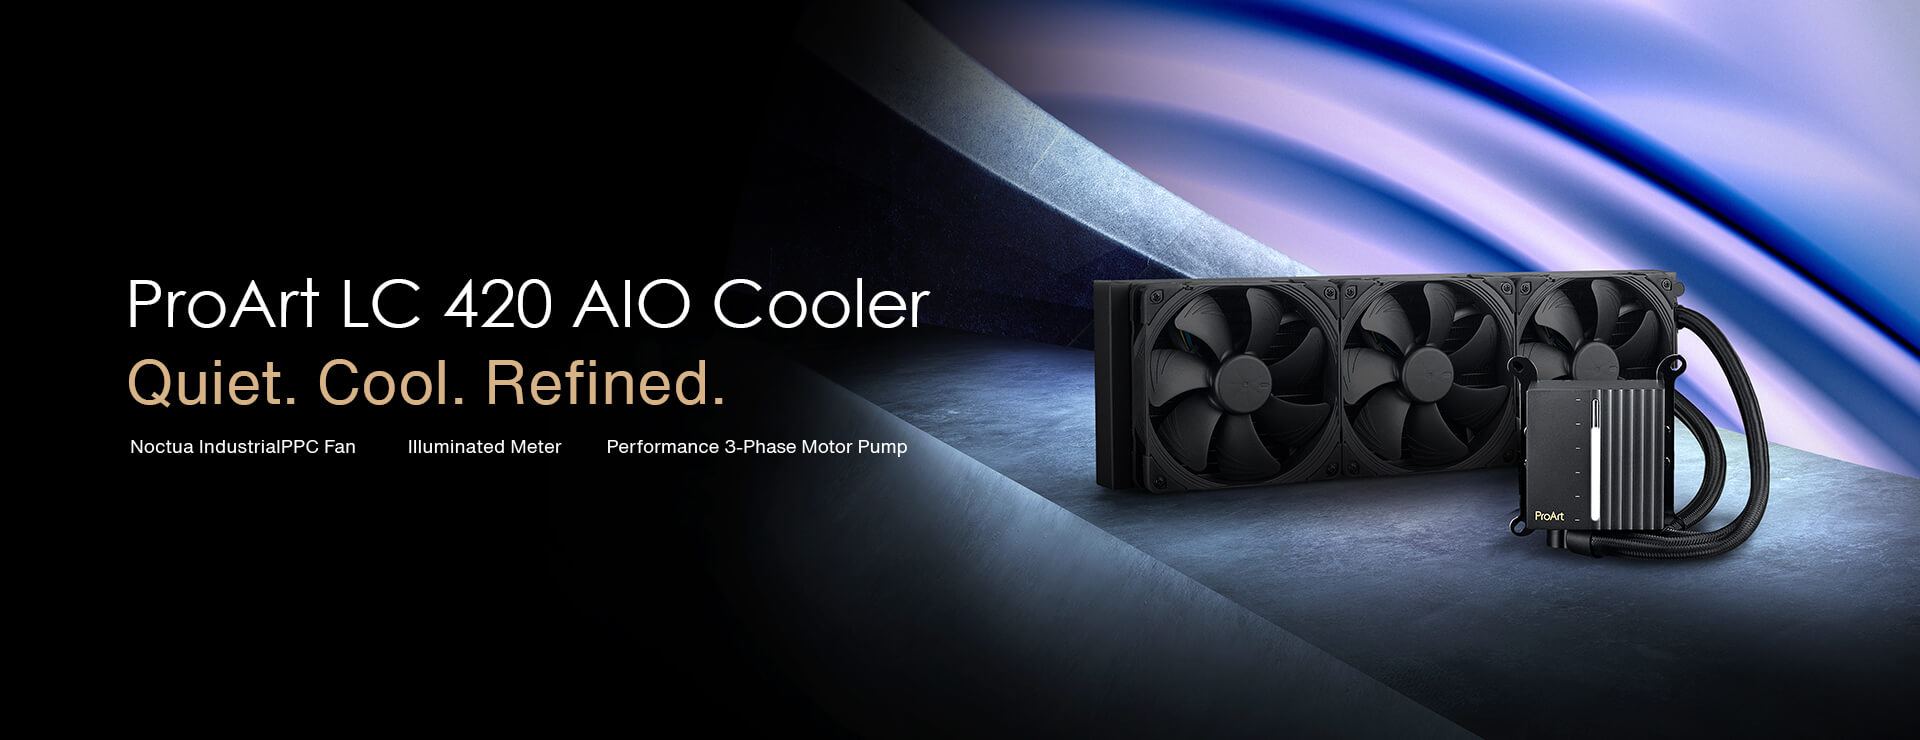 ProArt LC 420 AIO 散熱器。安靜、酷涼、精緻。配有 Noctua IndustrialPPC 風扇、發光儀表和高效能三相馬達幫浦。